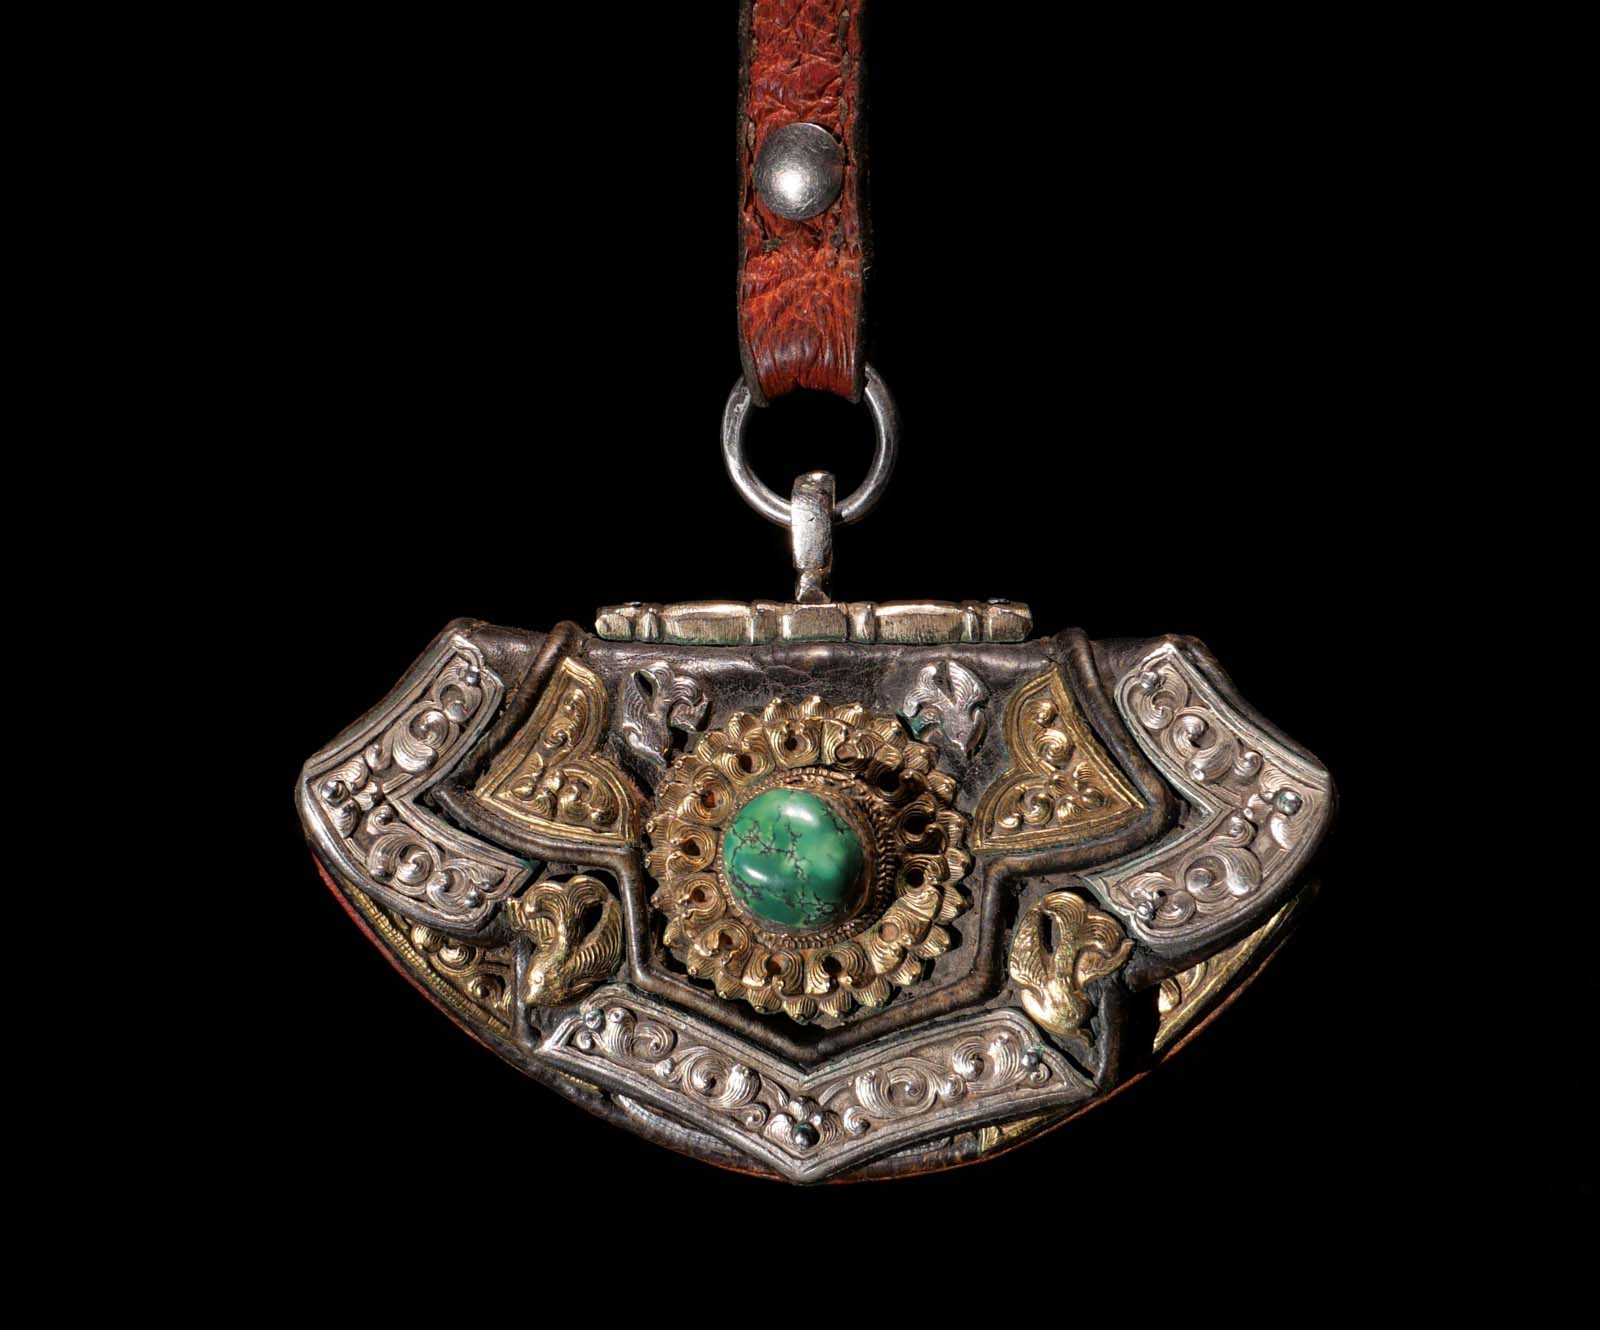 Börse, am Gürtel getragen Koralle, Silber, Bronze, Leder. Frühes 20. Jhdt. Zentral-Tibet. B 13 cm. 480.- €